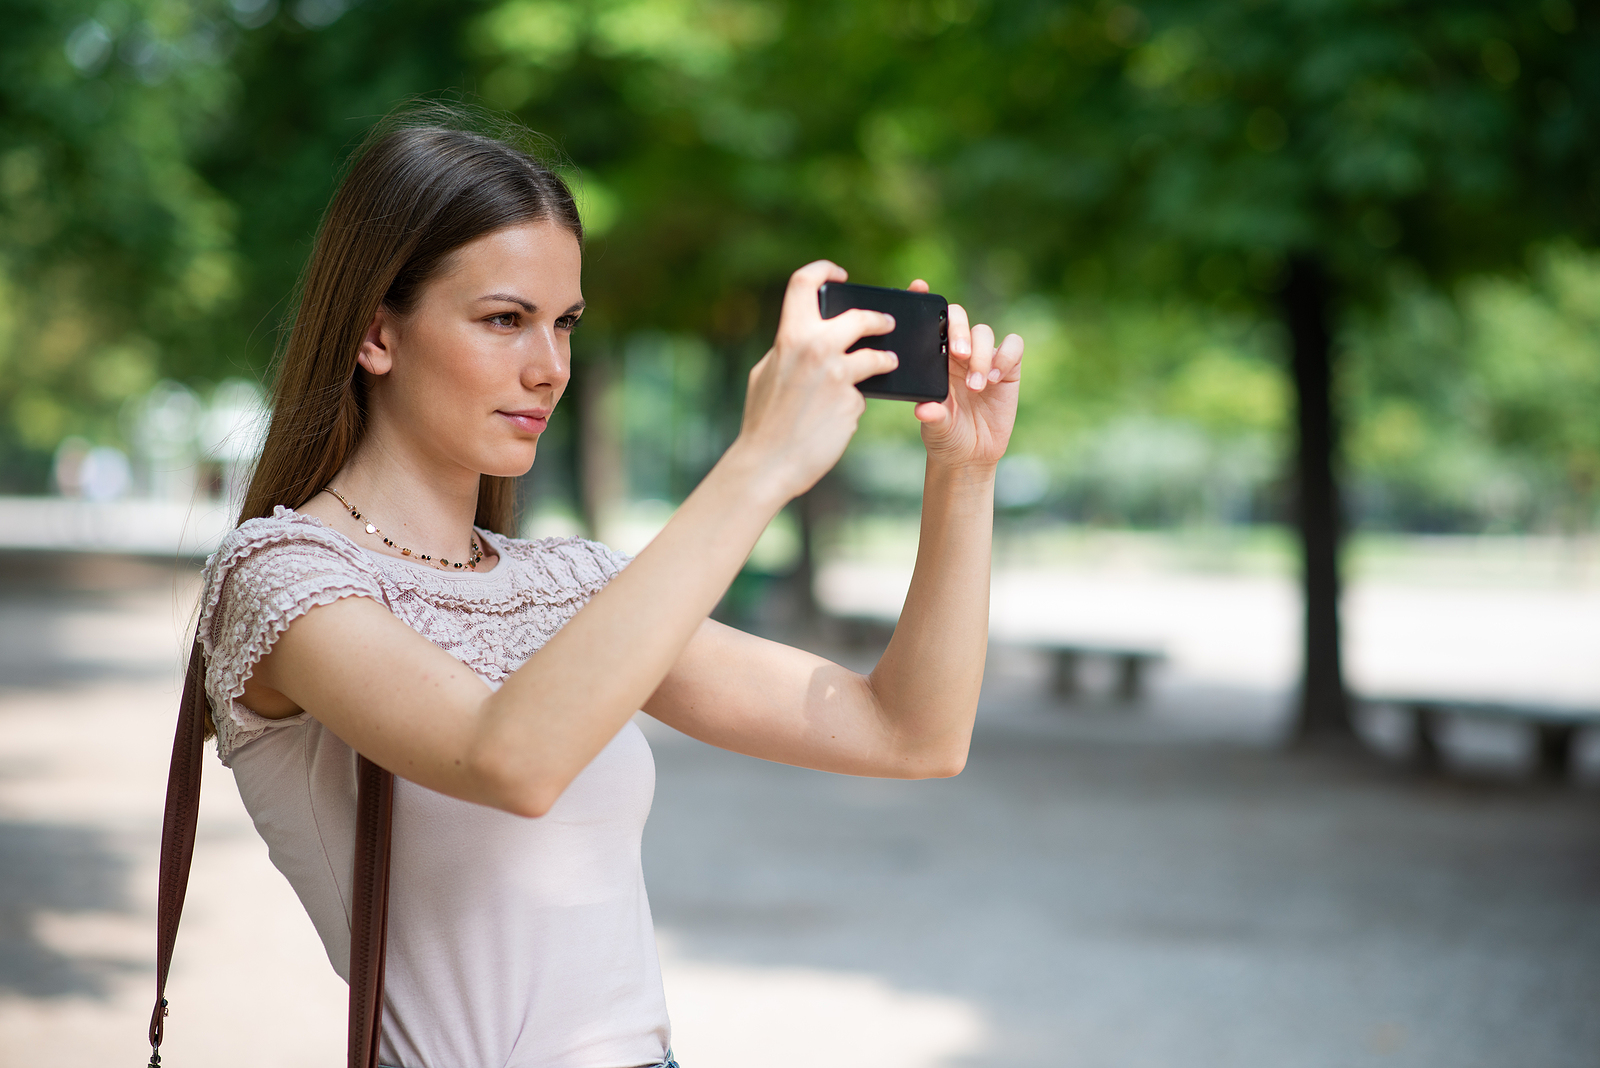 Tips for Taking Social Media Photos